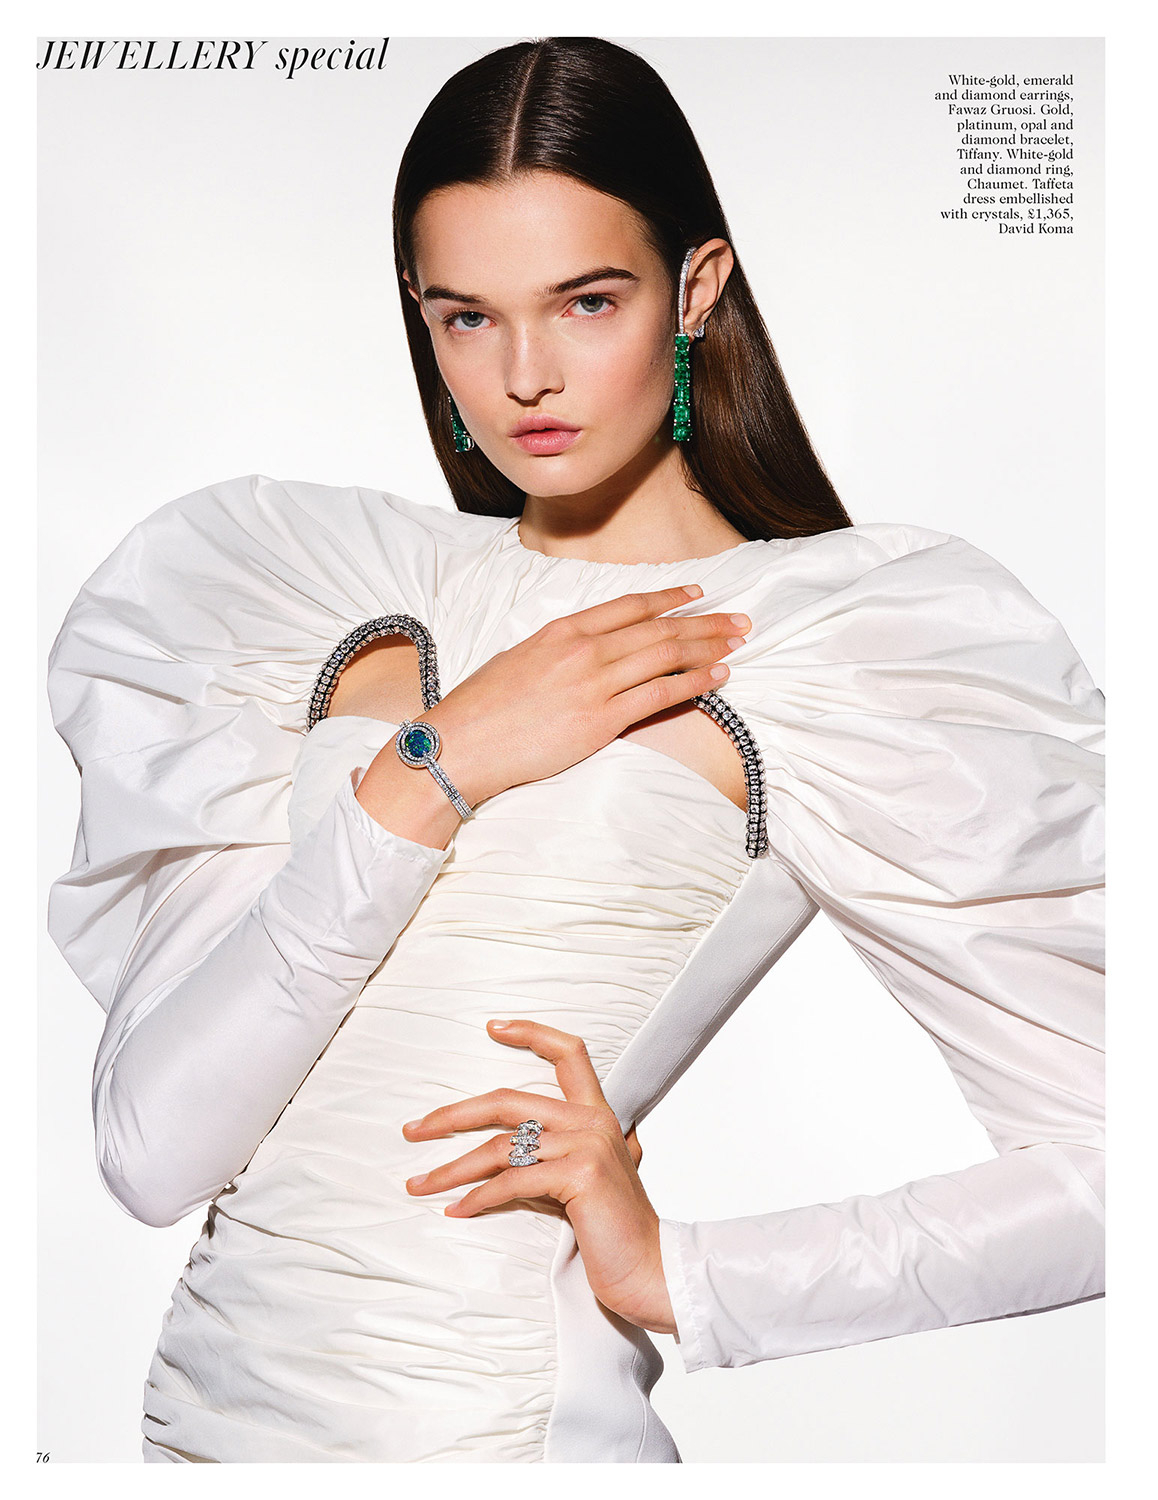 OndineAzoulay_-British_Vogue_August21_Jewellery_Issue_4.jpg